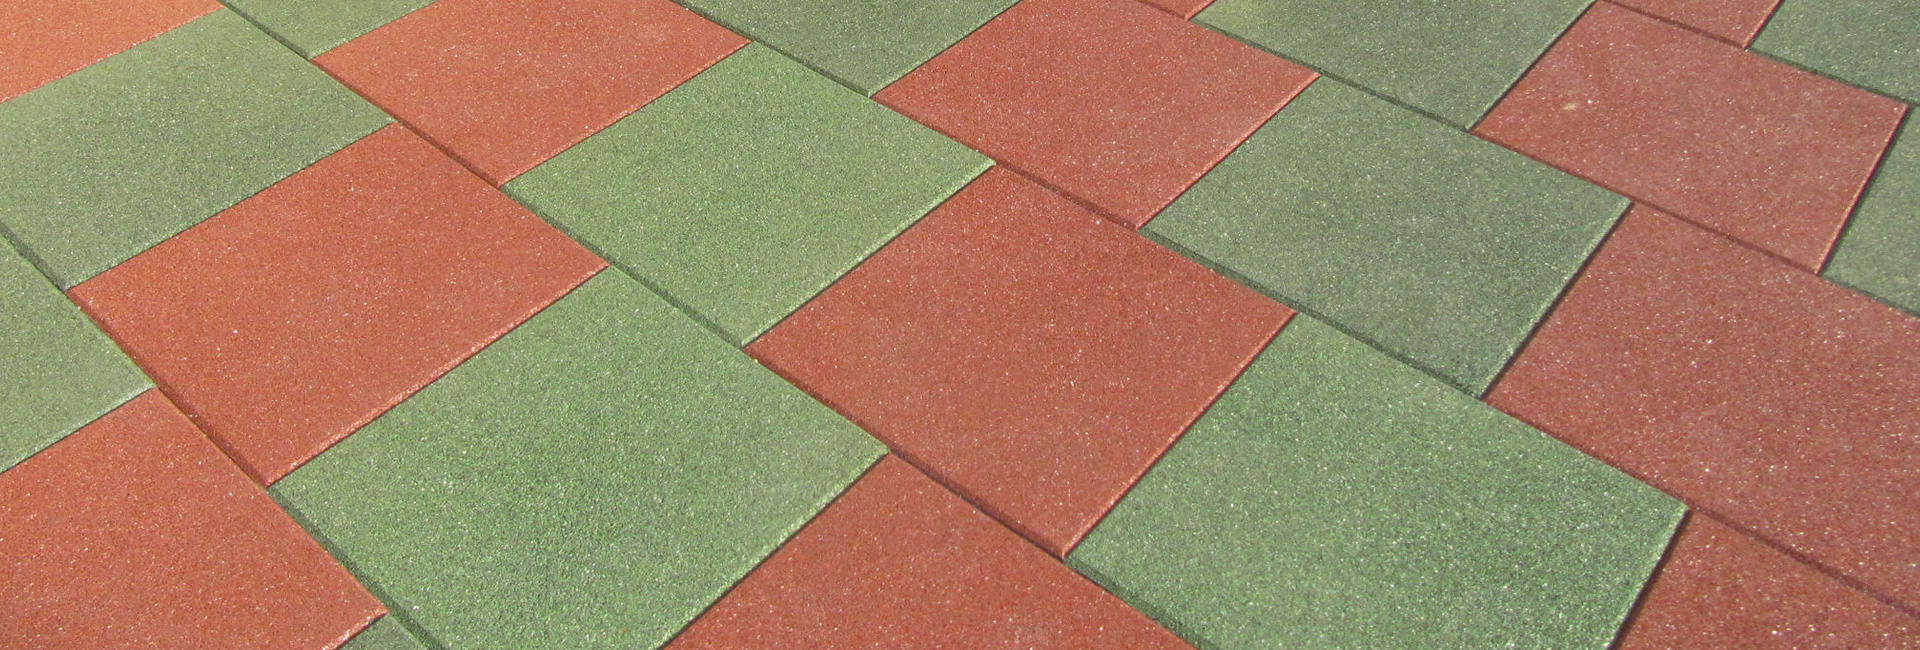 Atmacom SBR flooring tiles